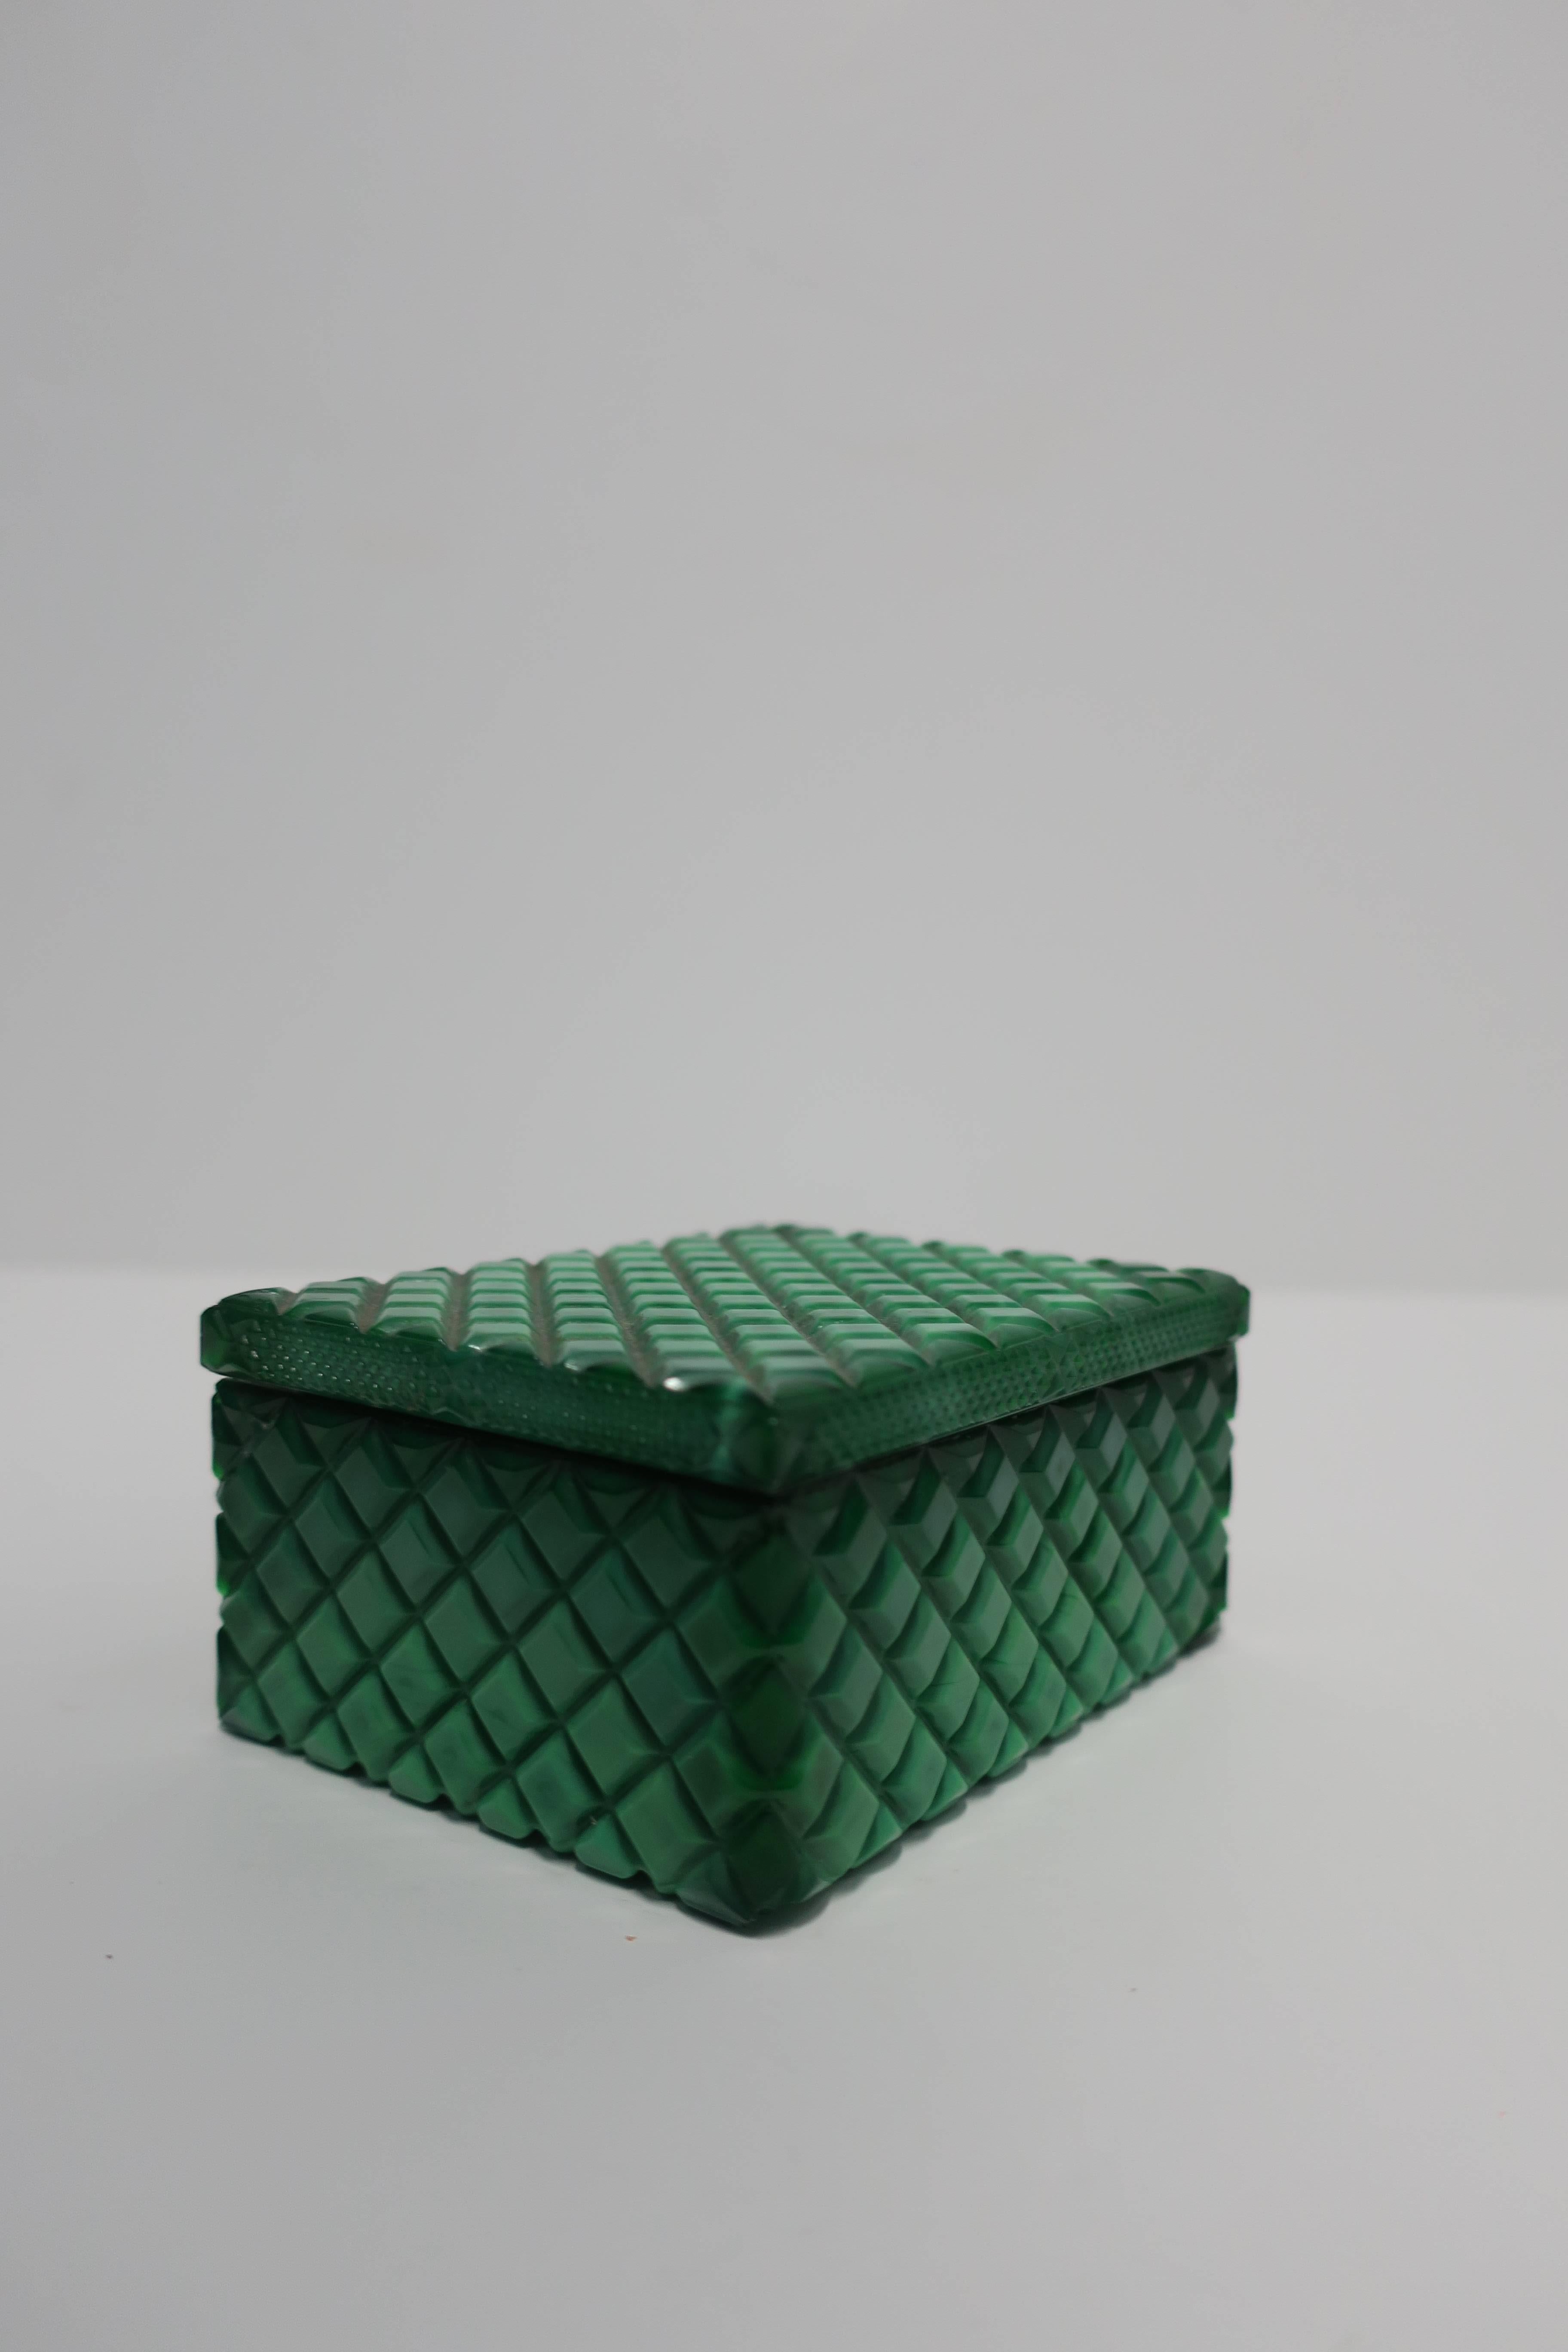 Vintage Malachite Green Style Glass Box 1